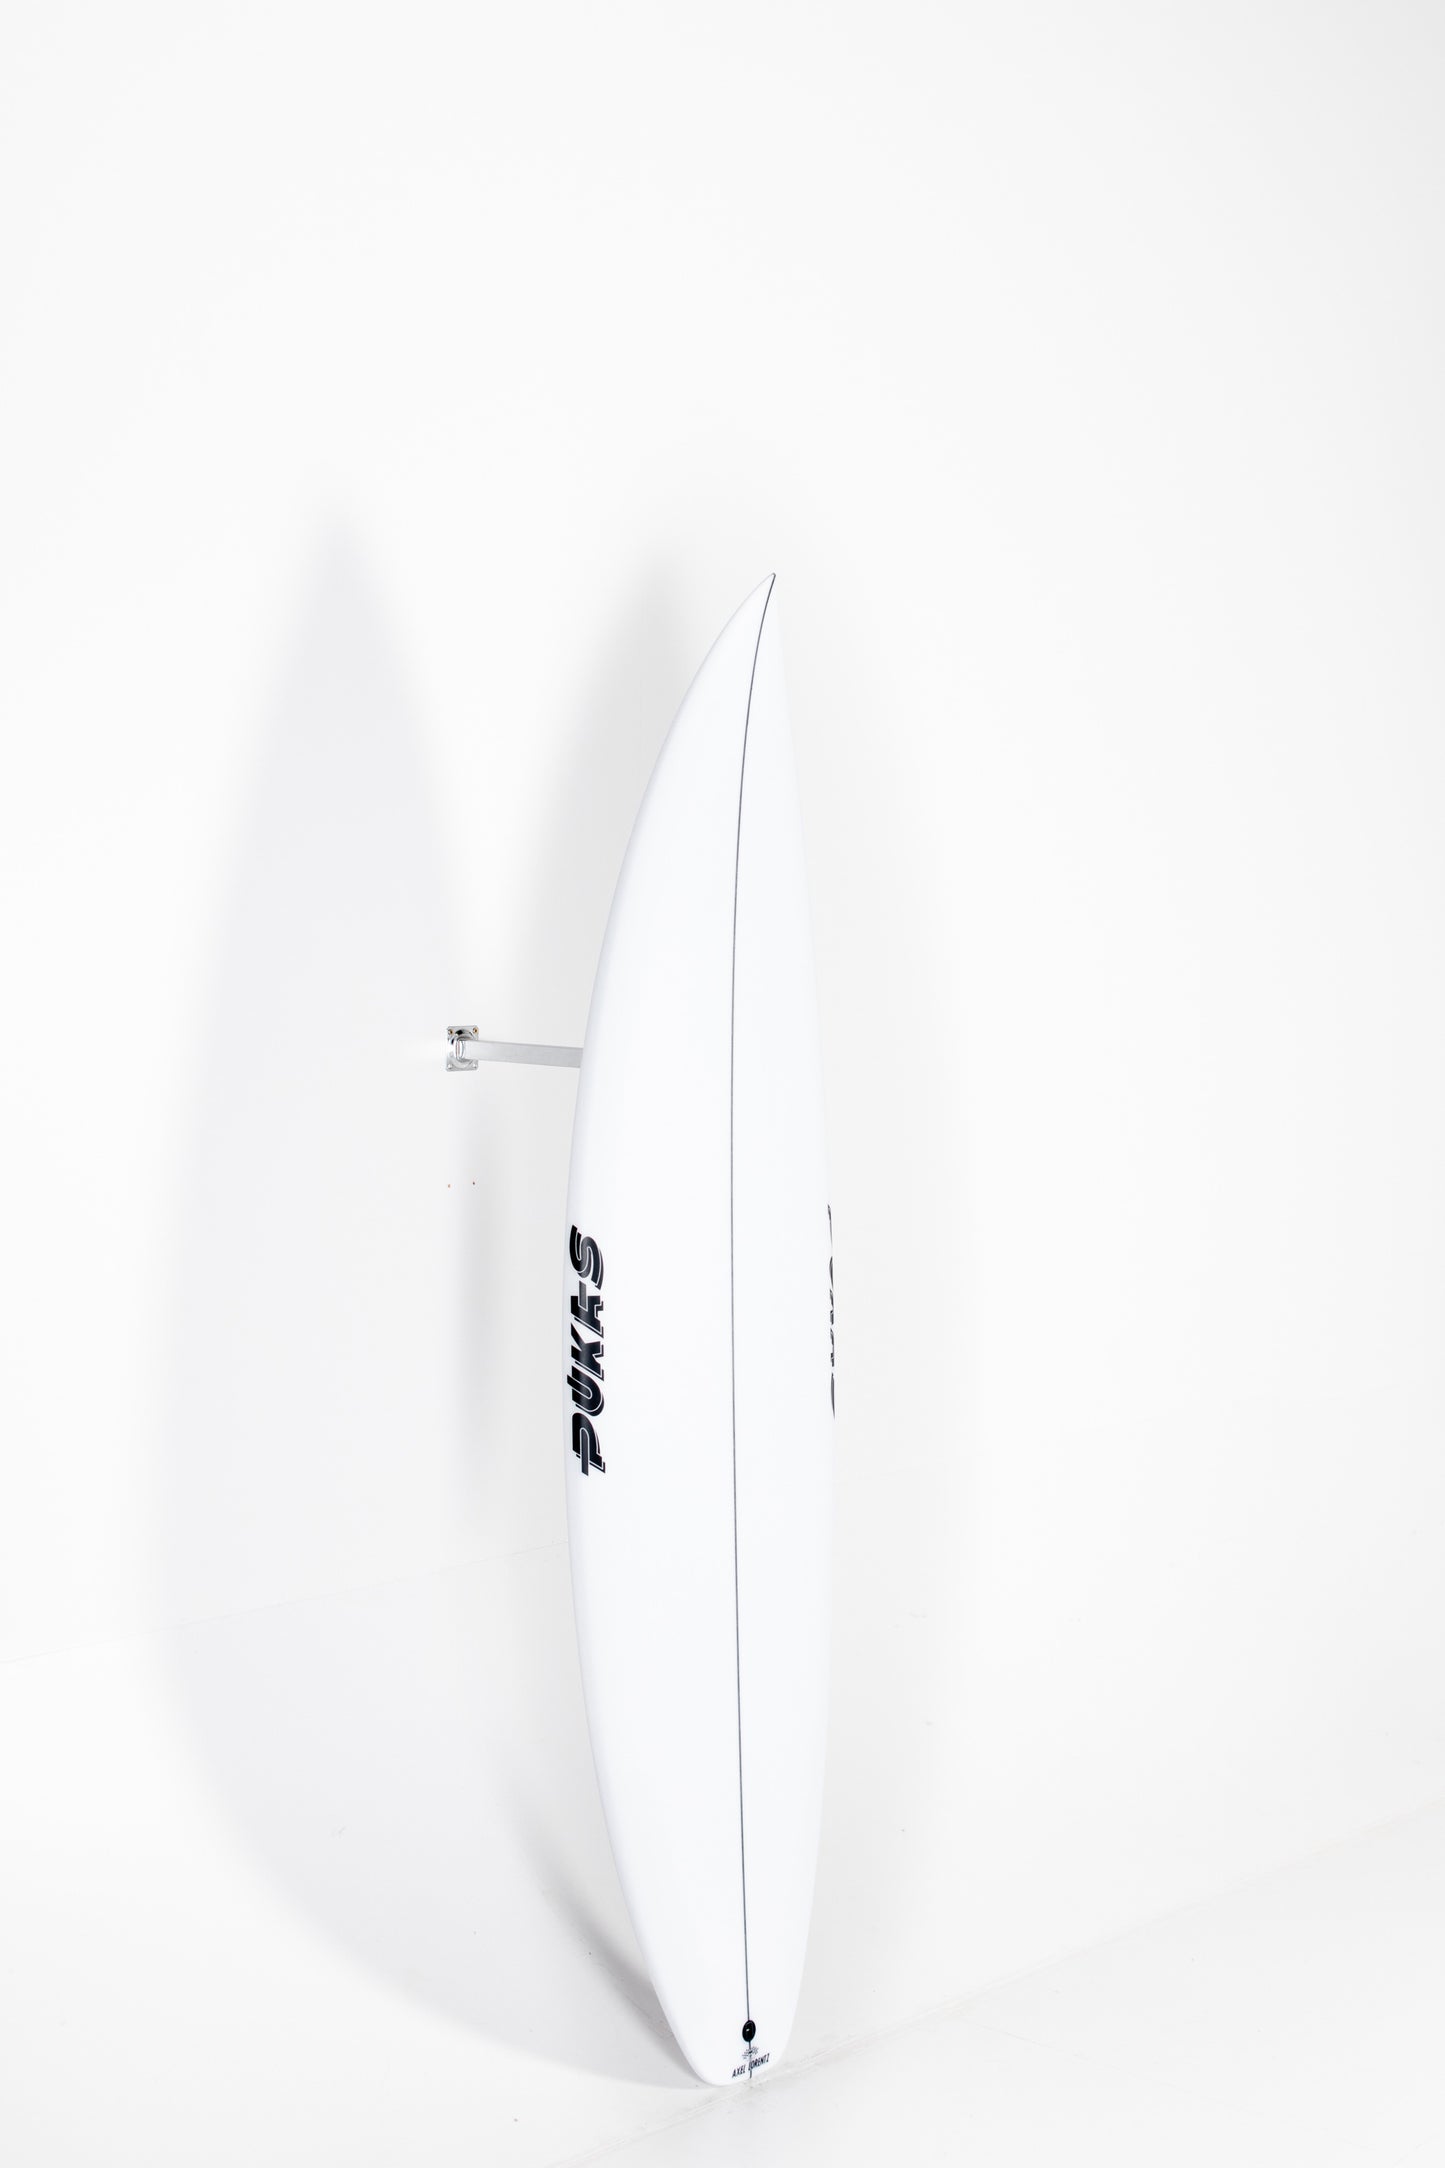 
                  
                    Pukas Surf Shop - Pukas Surfboard - DARK by Axel Lorentz - 6’1” x 19,63 x 2,4 - 30,67L - AX06153
                  
                